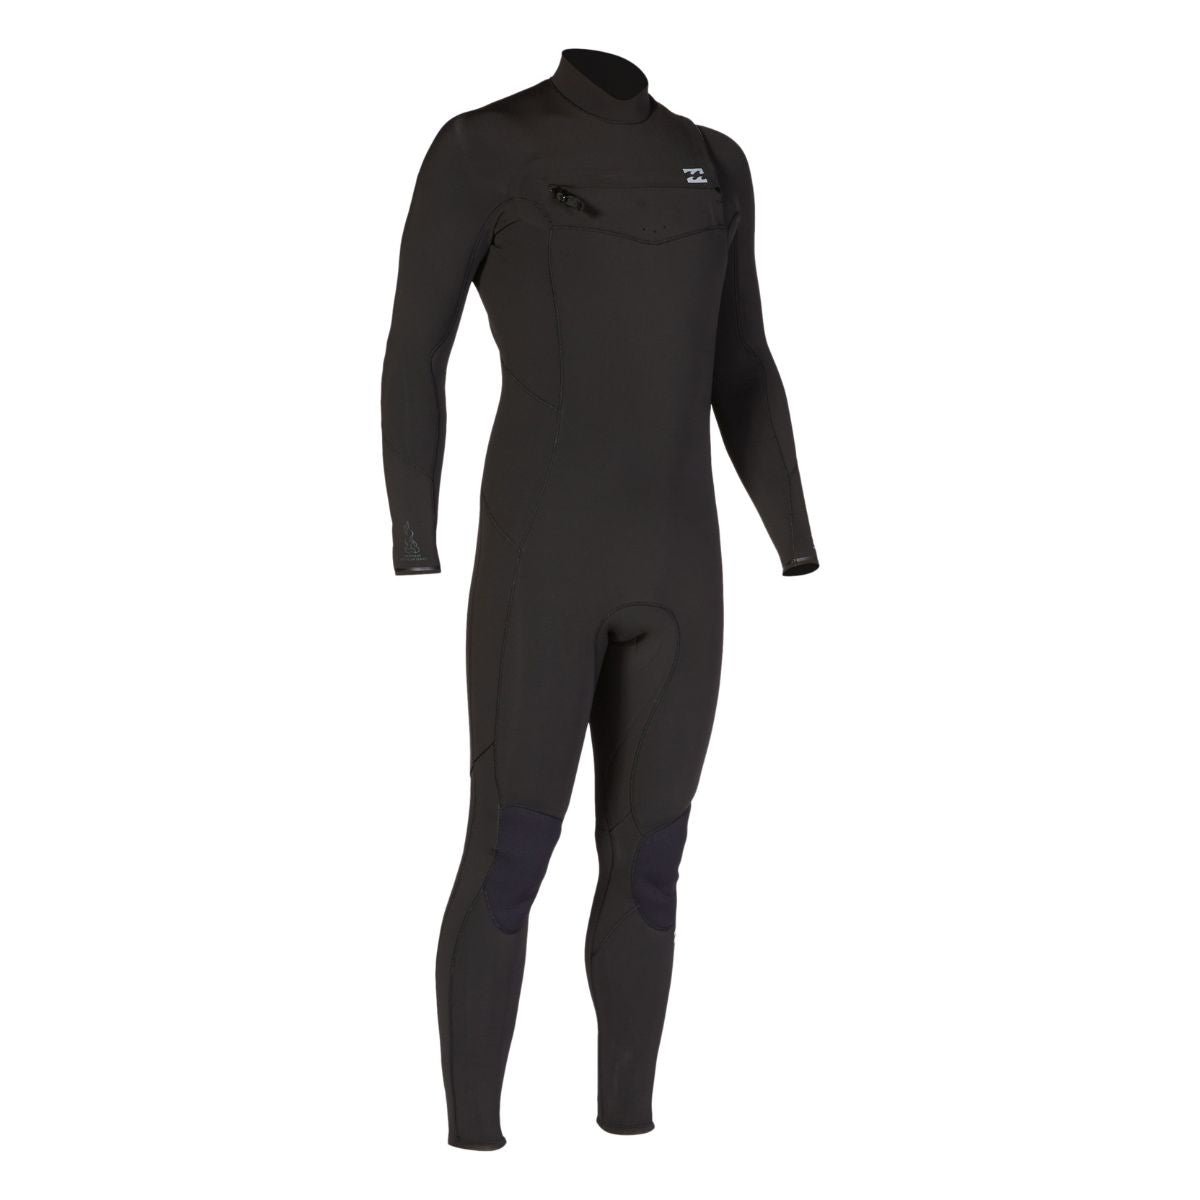 Billabong 504 Absolute Chest Zip Full Wetsuit in Black - BoardCo